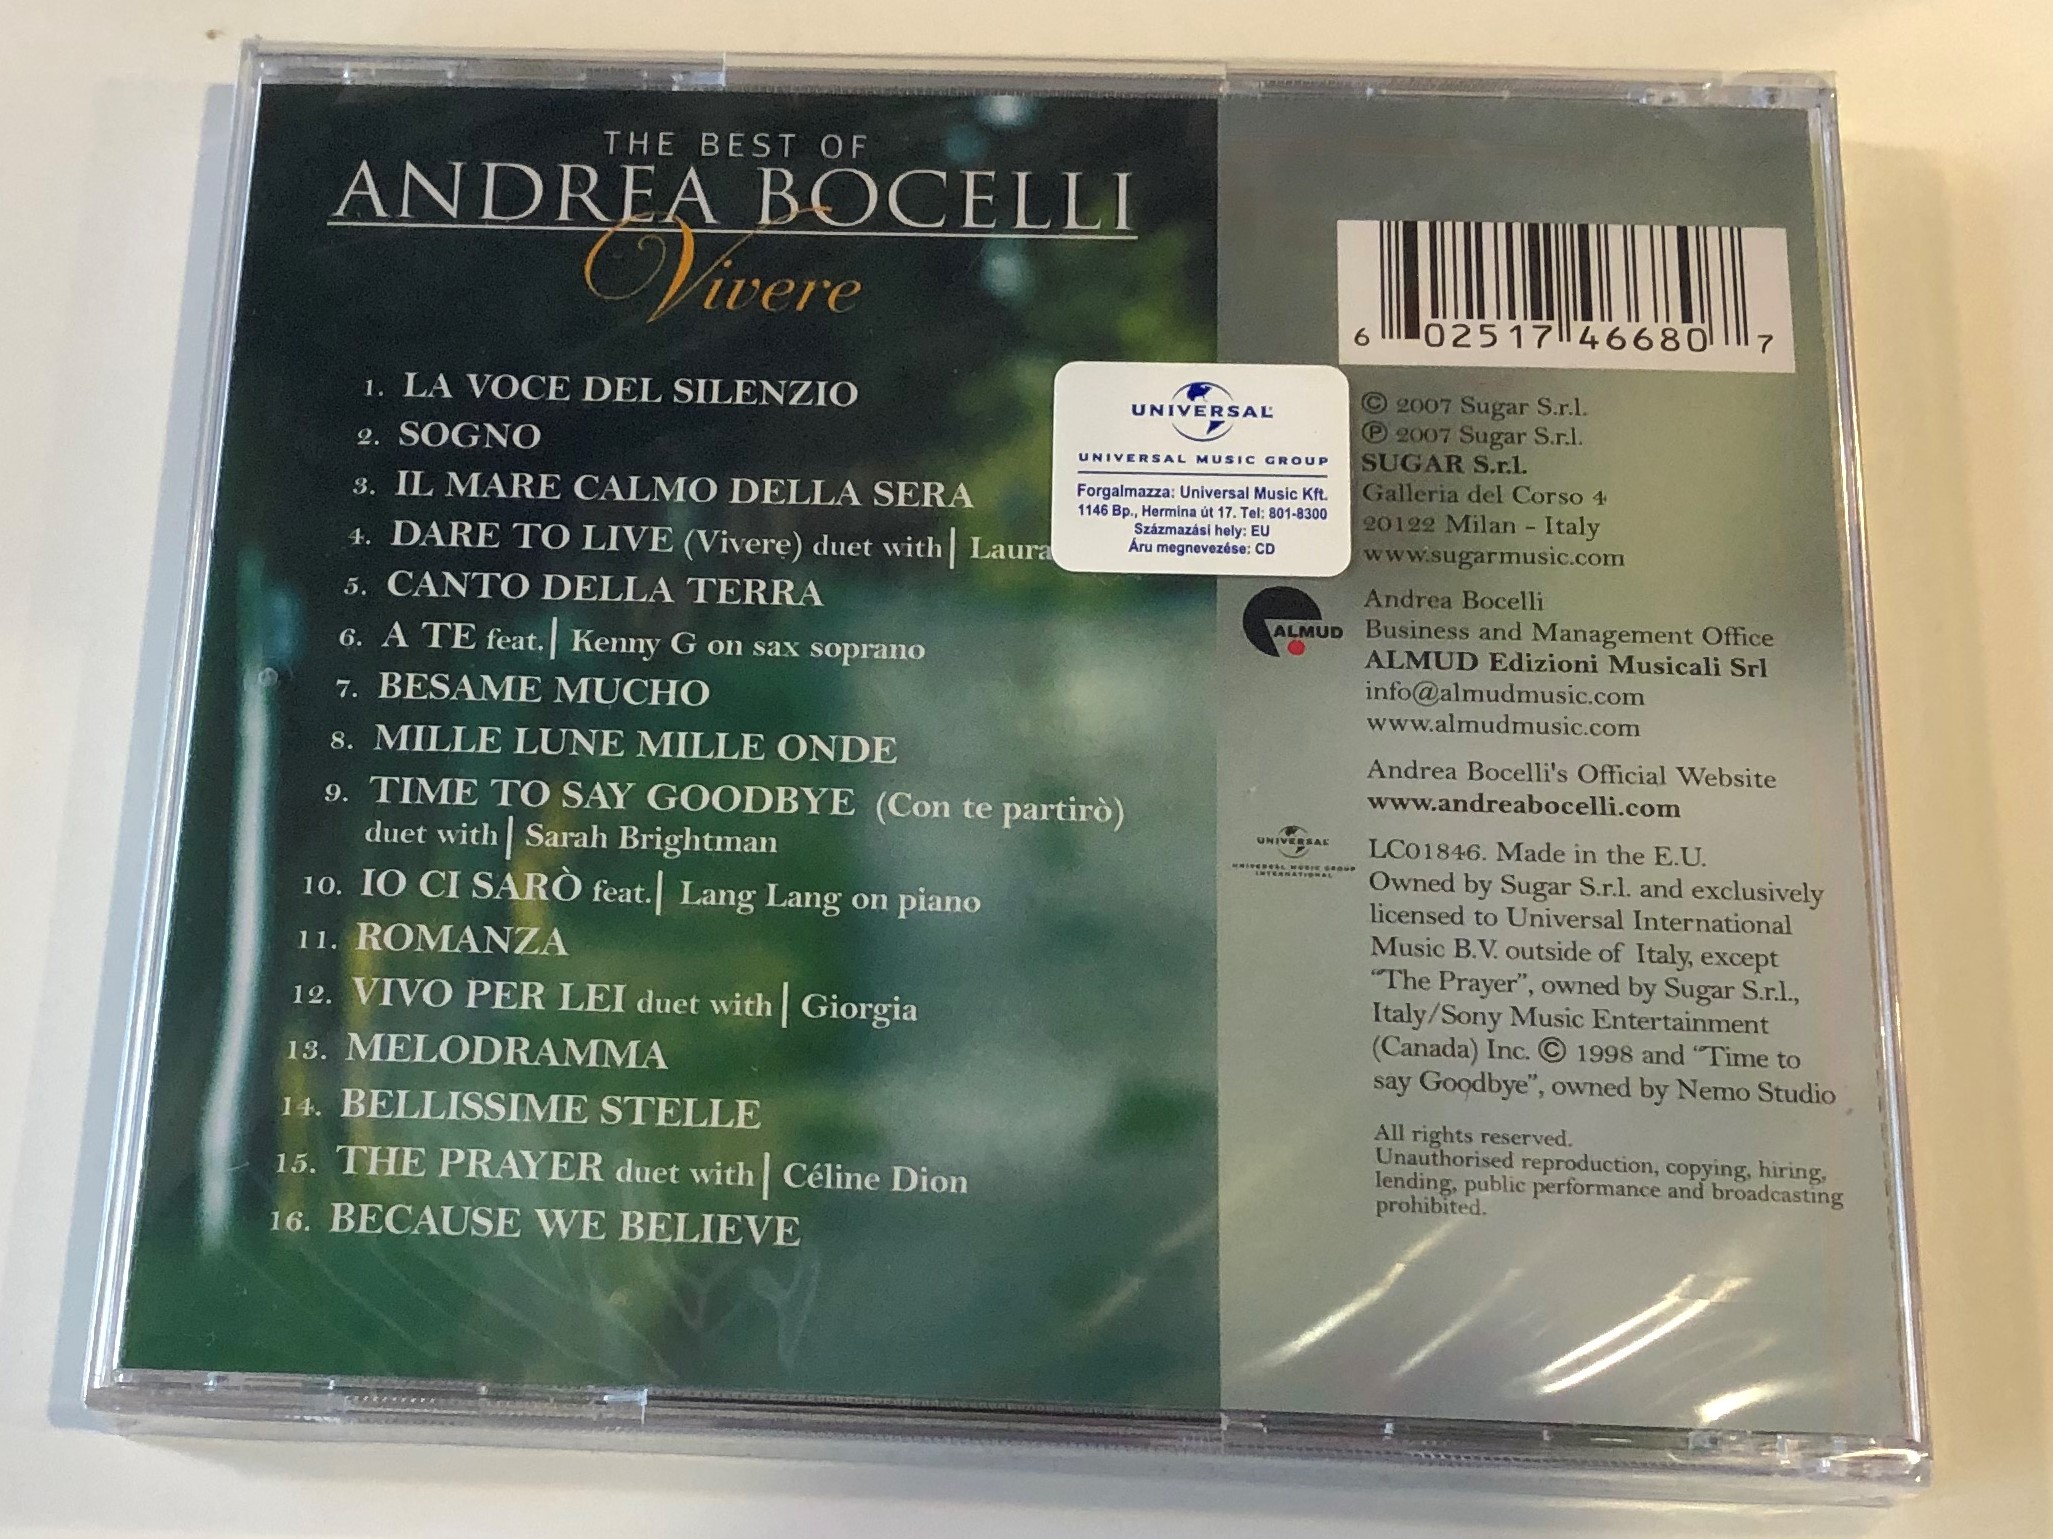 the-best-of-andrea-bocelli-vivere-sugar-audio-cd-2007-602517466807-2-.jpg